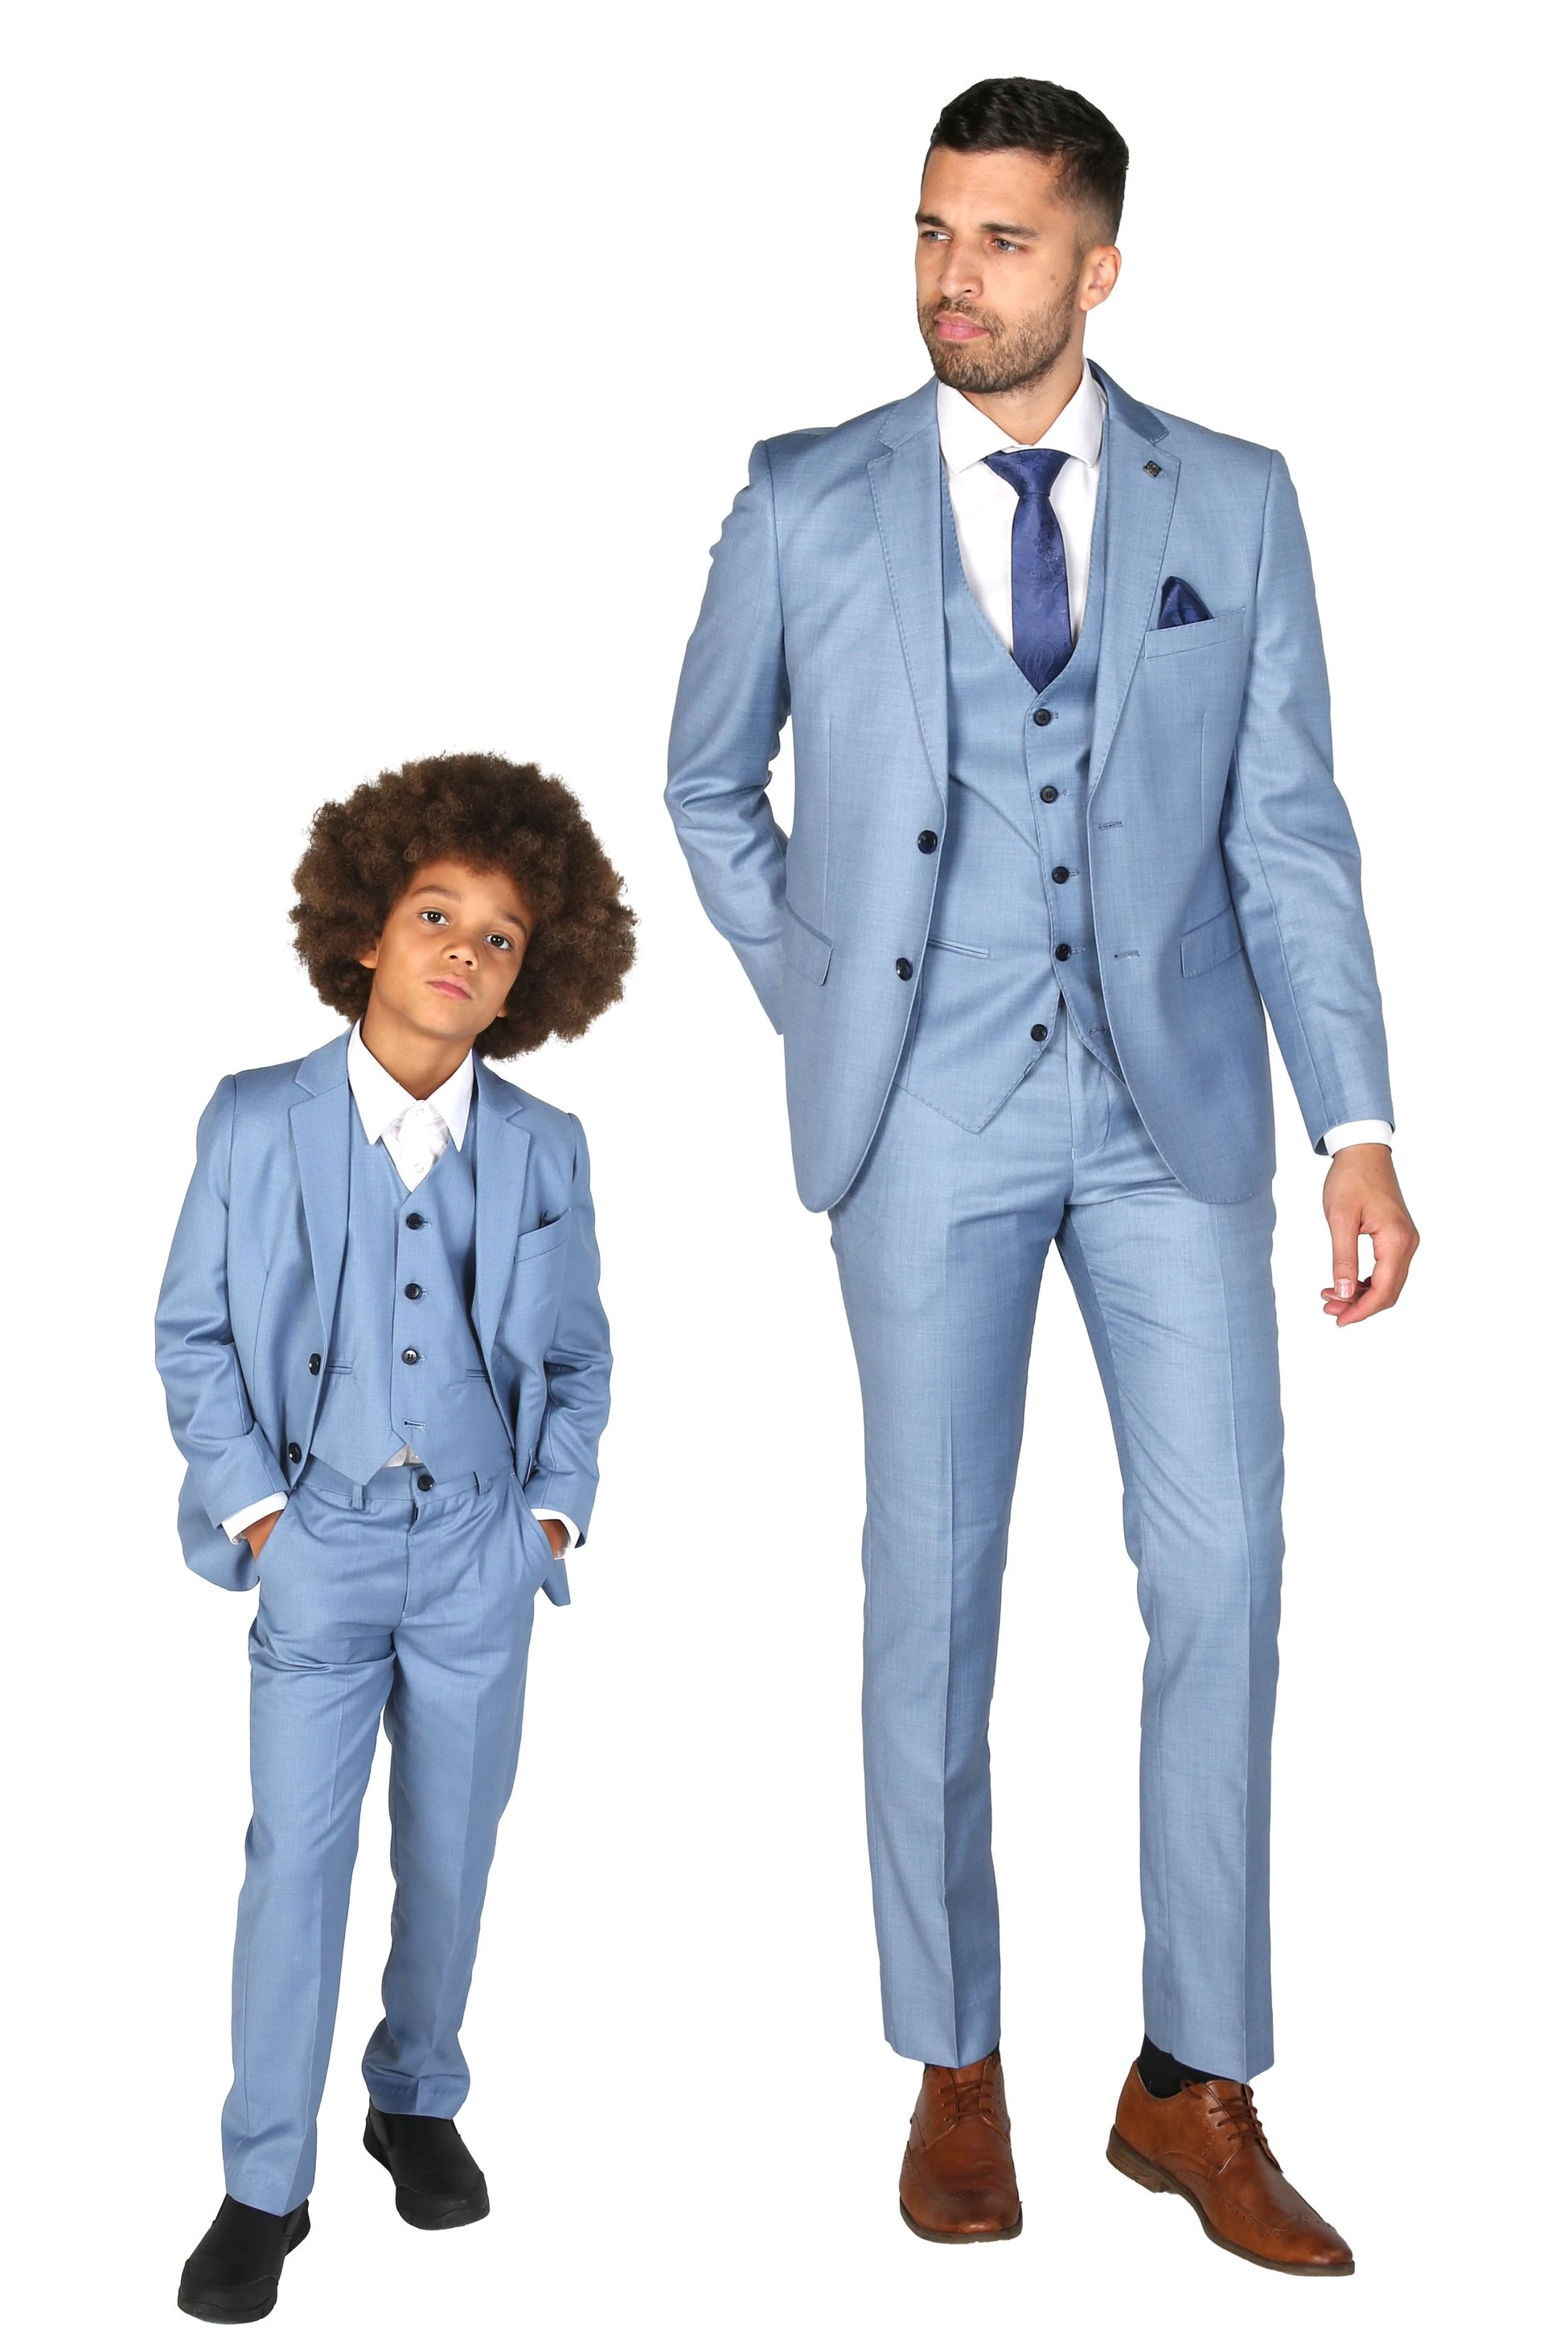 Jungen maßgeschneiderter Anzug Set in Himmelblau - Charles